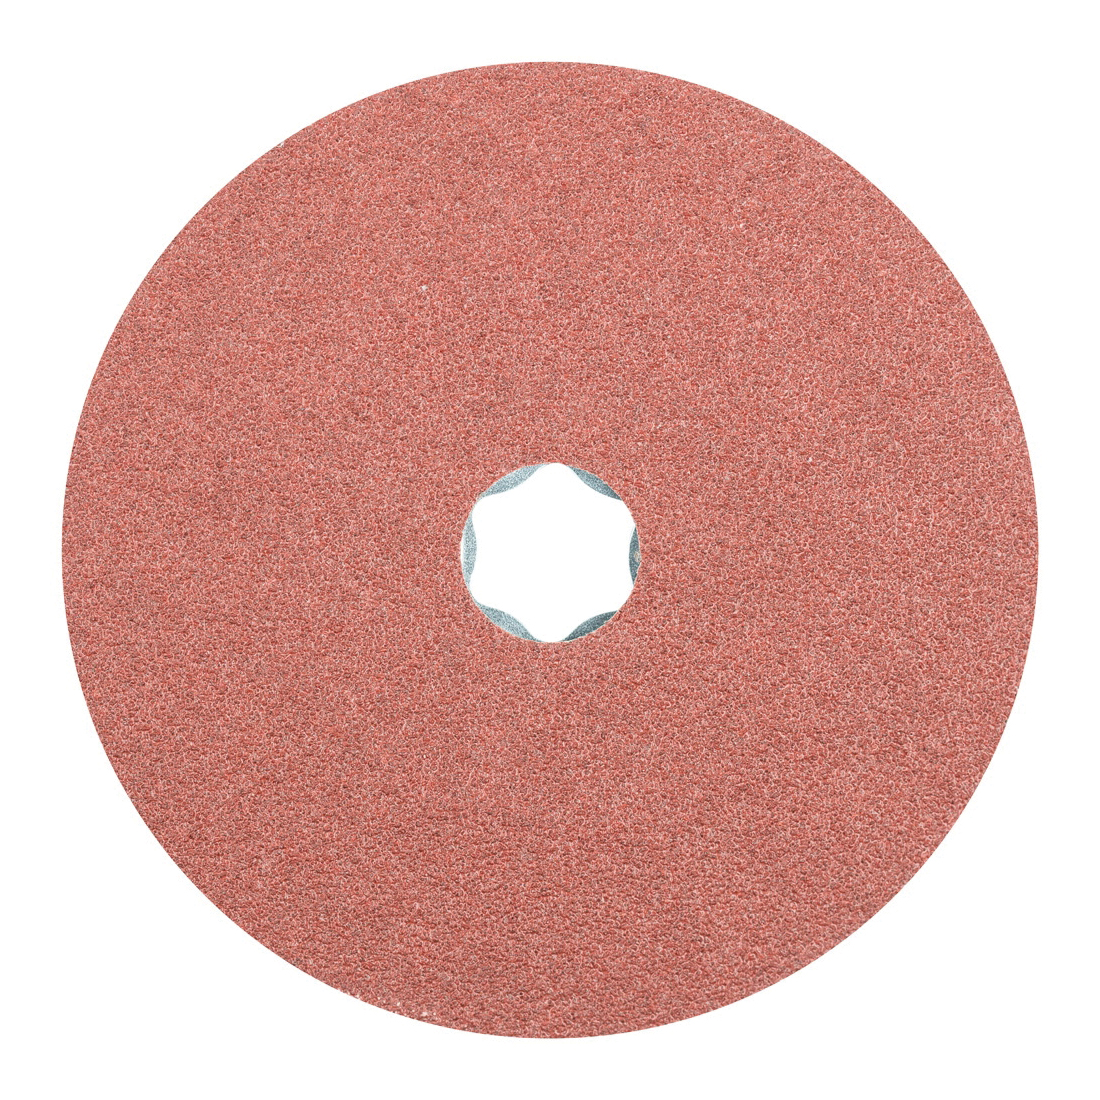 PFERD COMBICLICK® 40101 Coated Abrasive Disc, 5 in Dia, 50 Grit, Aluminum Oxide Abrasive